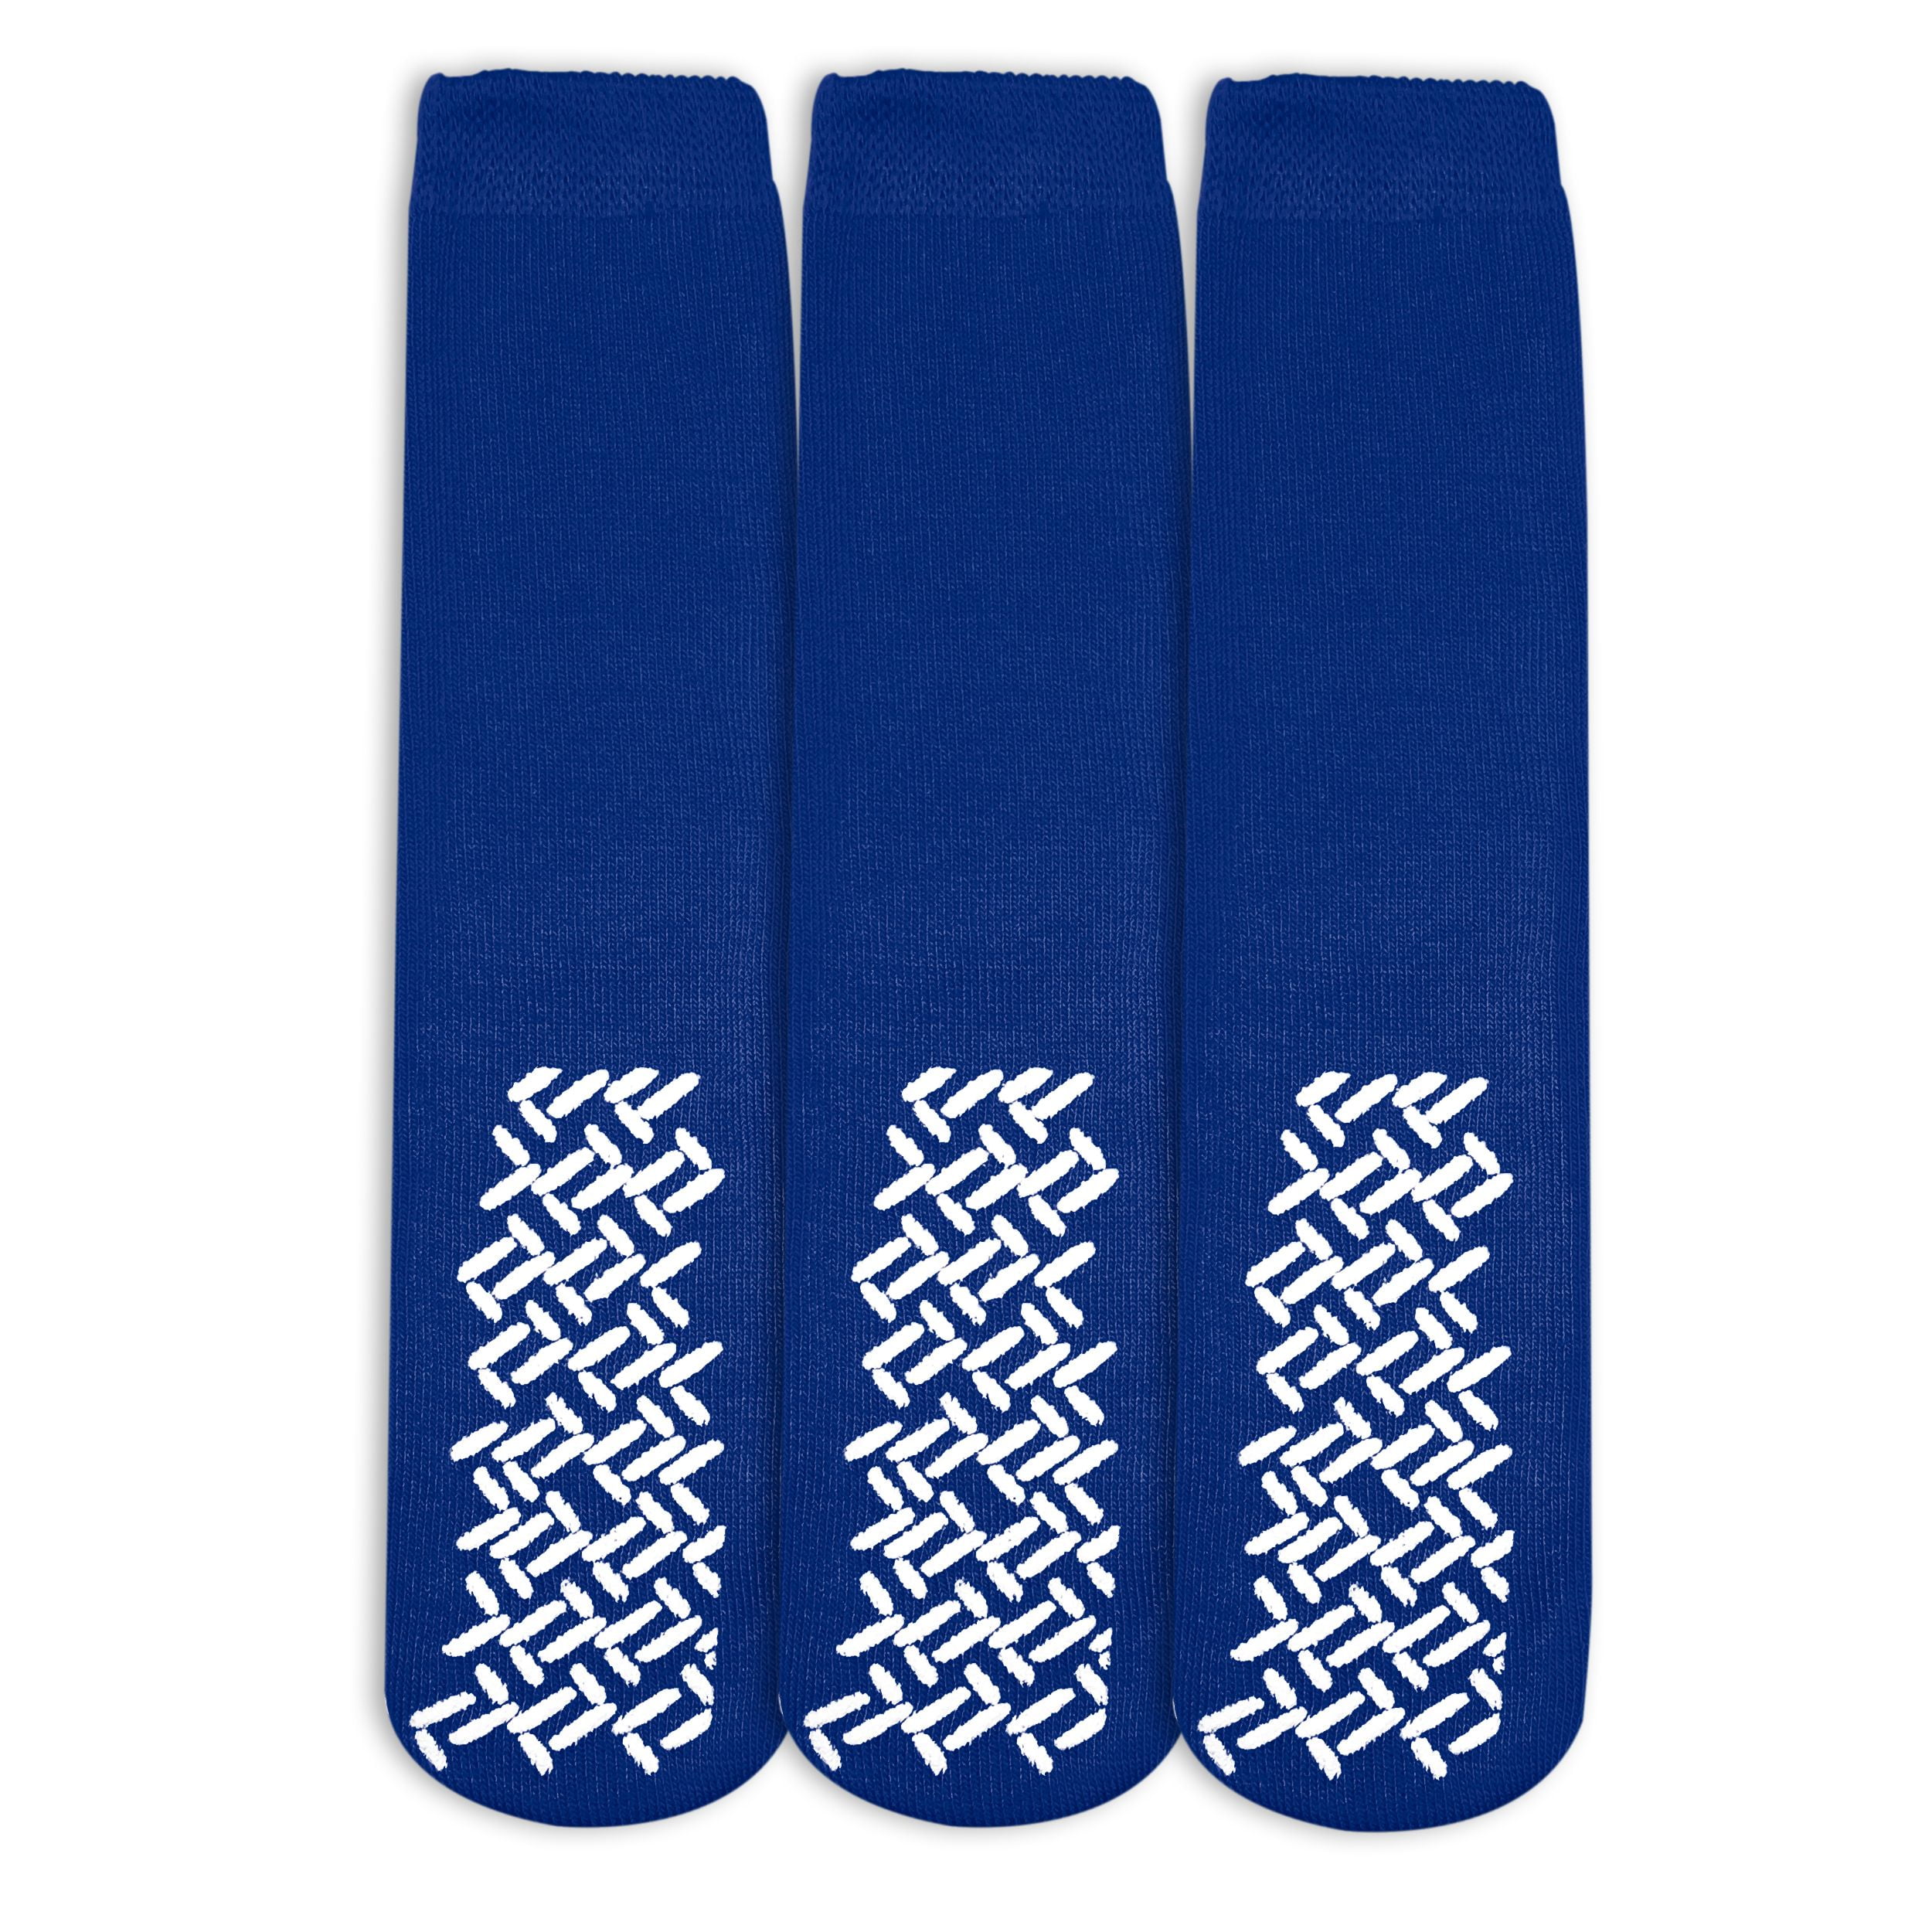 Dropship Pack Of 48 Unisex Gripper Socks; Youth Shoe 8 To 4 1/2. Light Blue  Terry Cloth Socks. Hospital Socks Anti Slip. Single-Imprint Terries Slipper  Socks. Skid-Resistant Tread Sole. to Sell Online